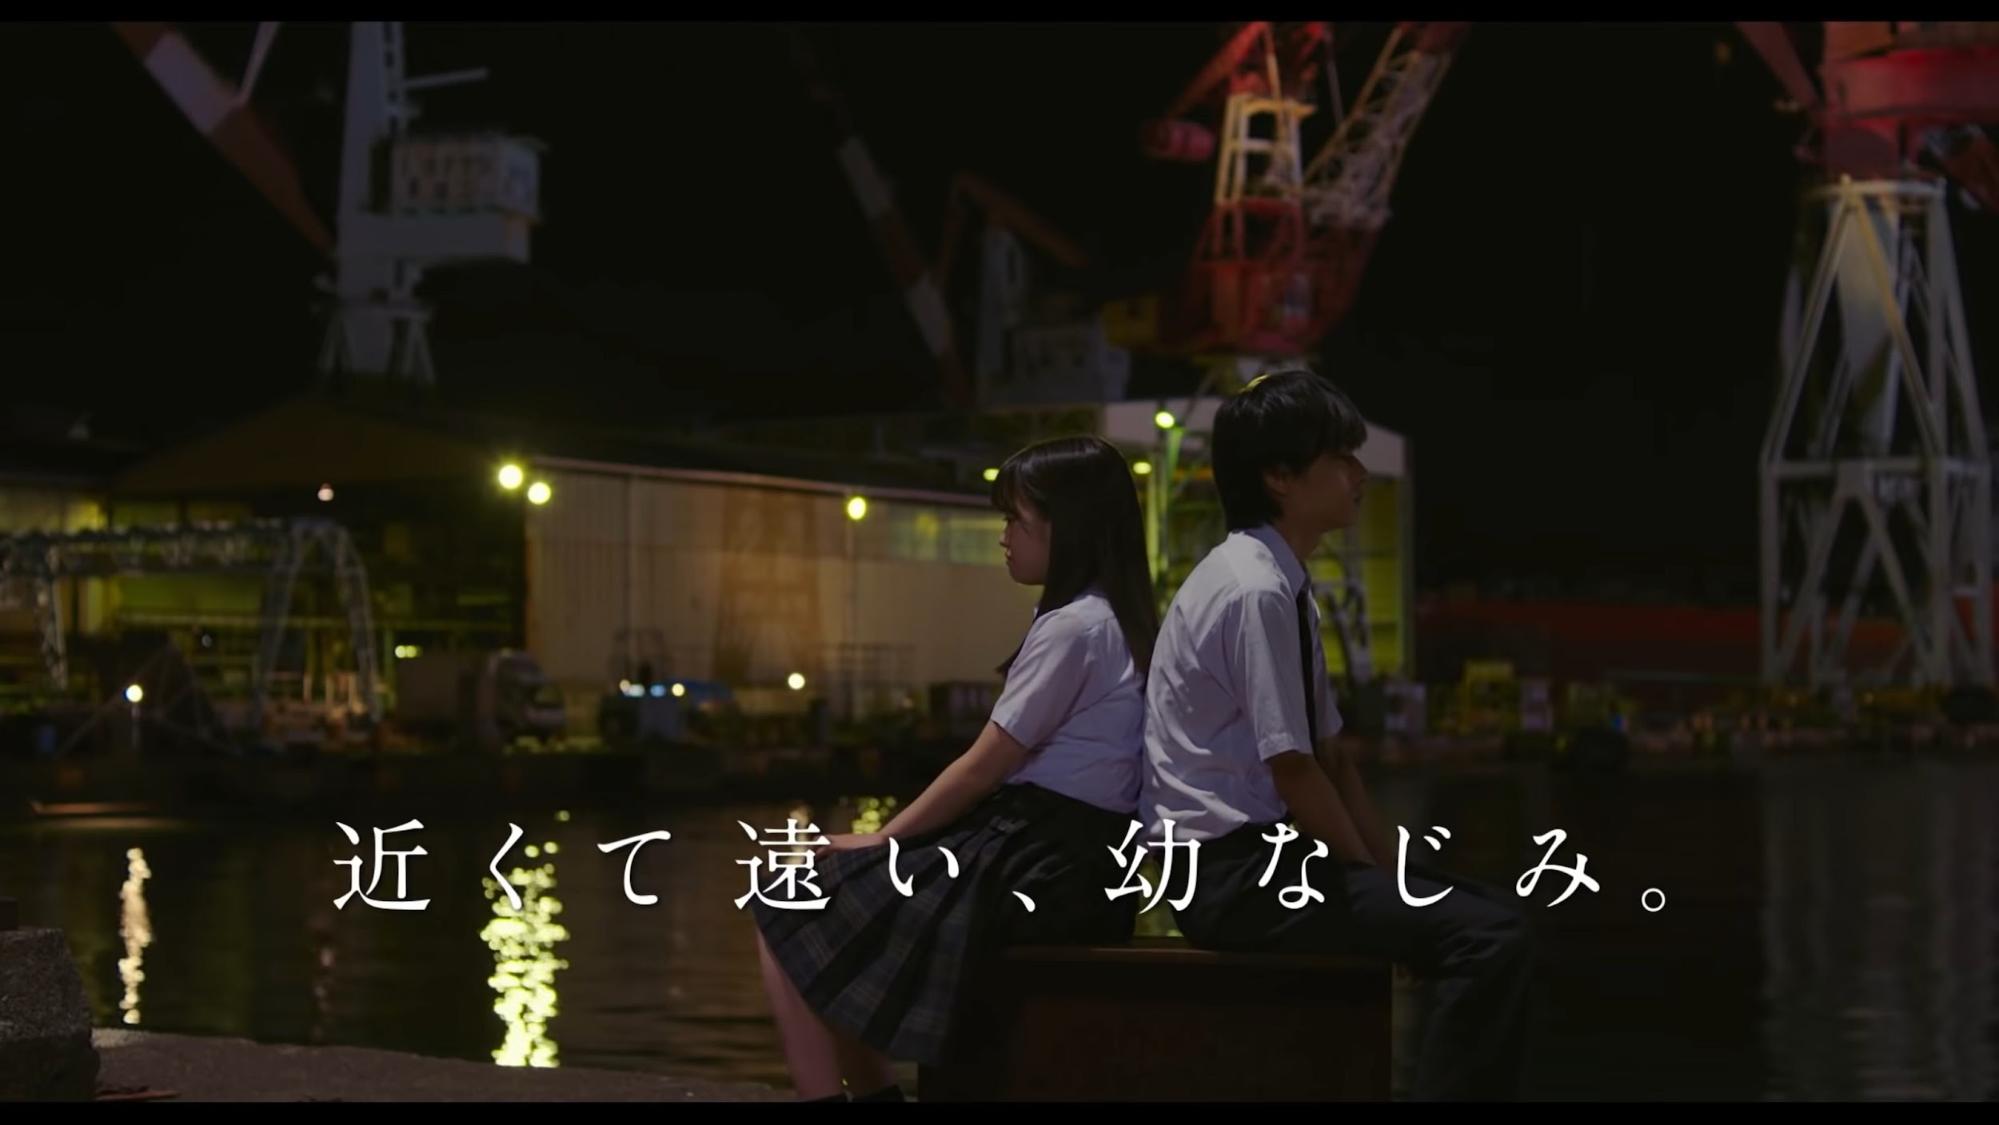 Japanese high school romance movies - Haruta & Chika